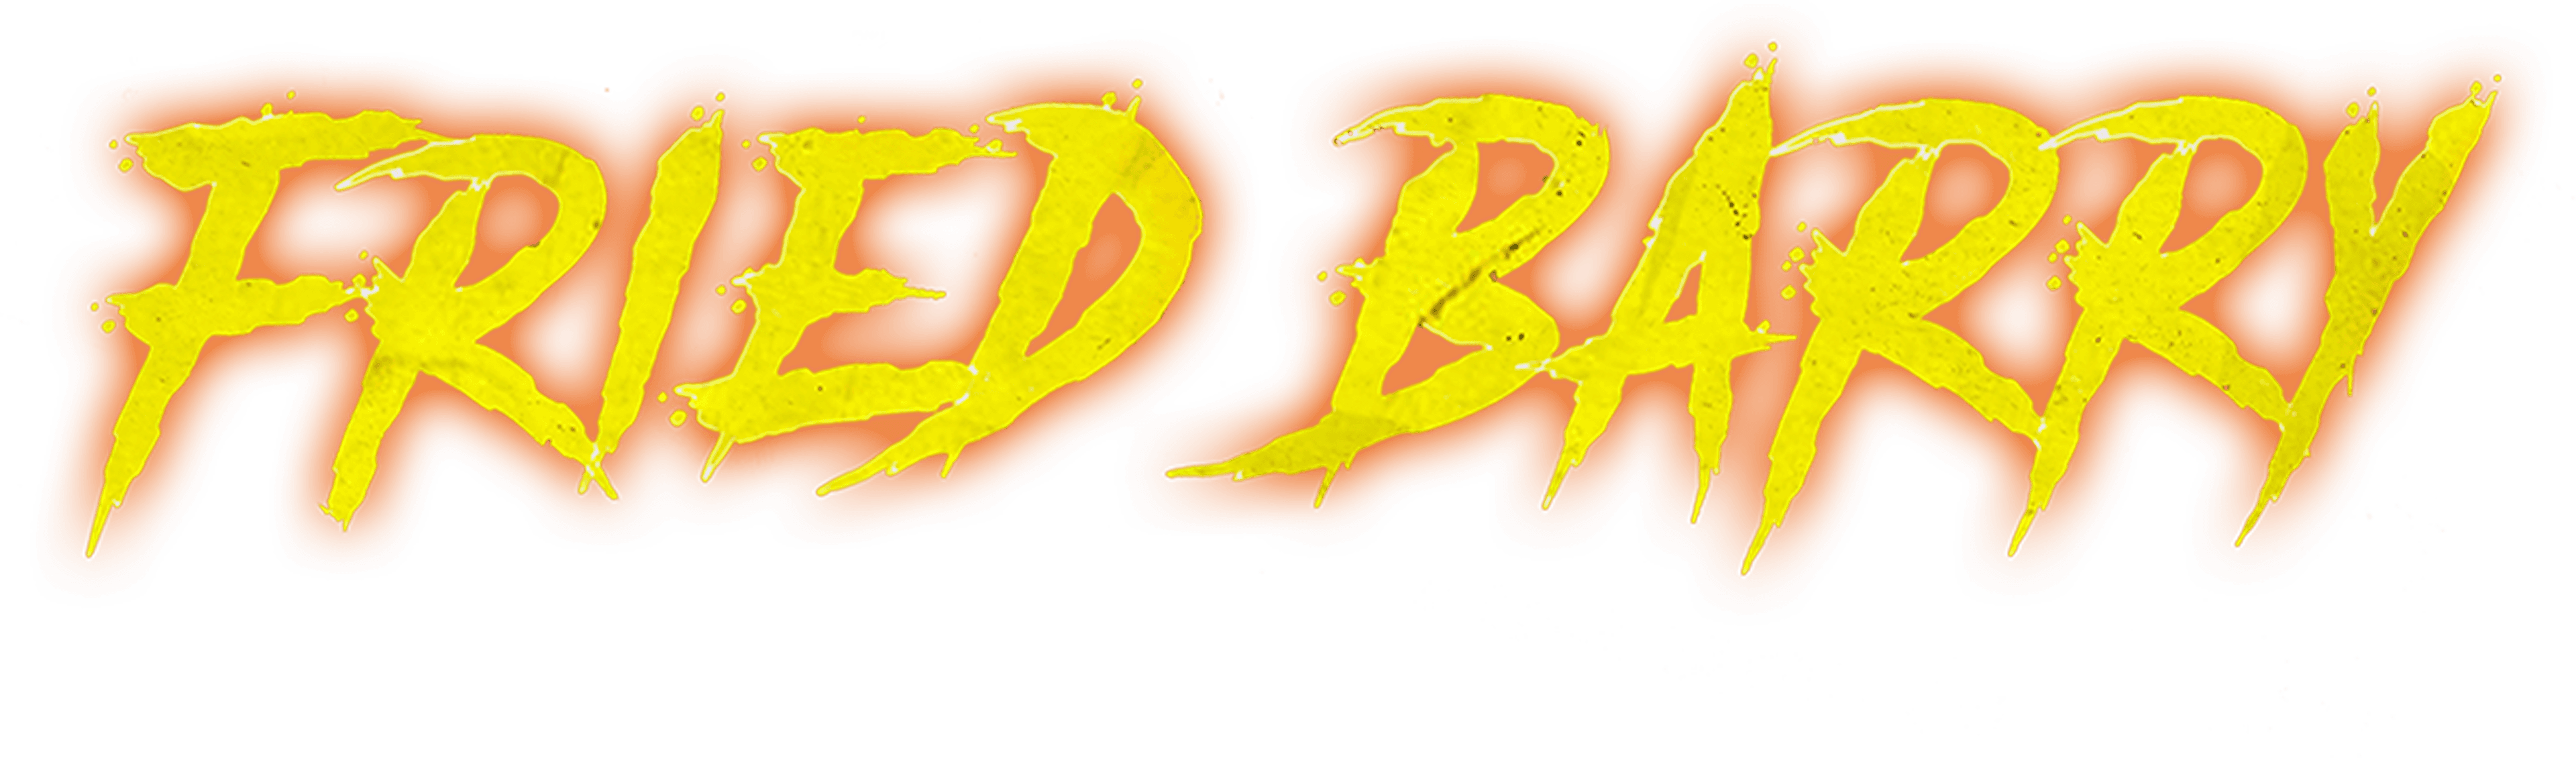 Fried Barry logo